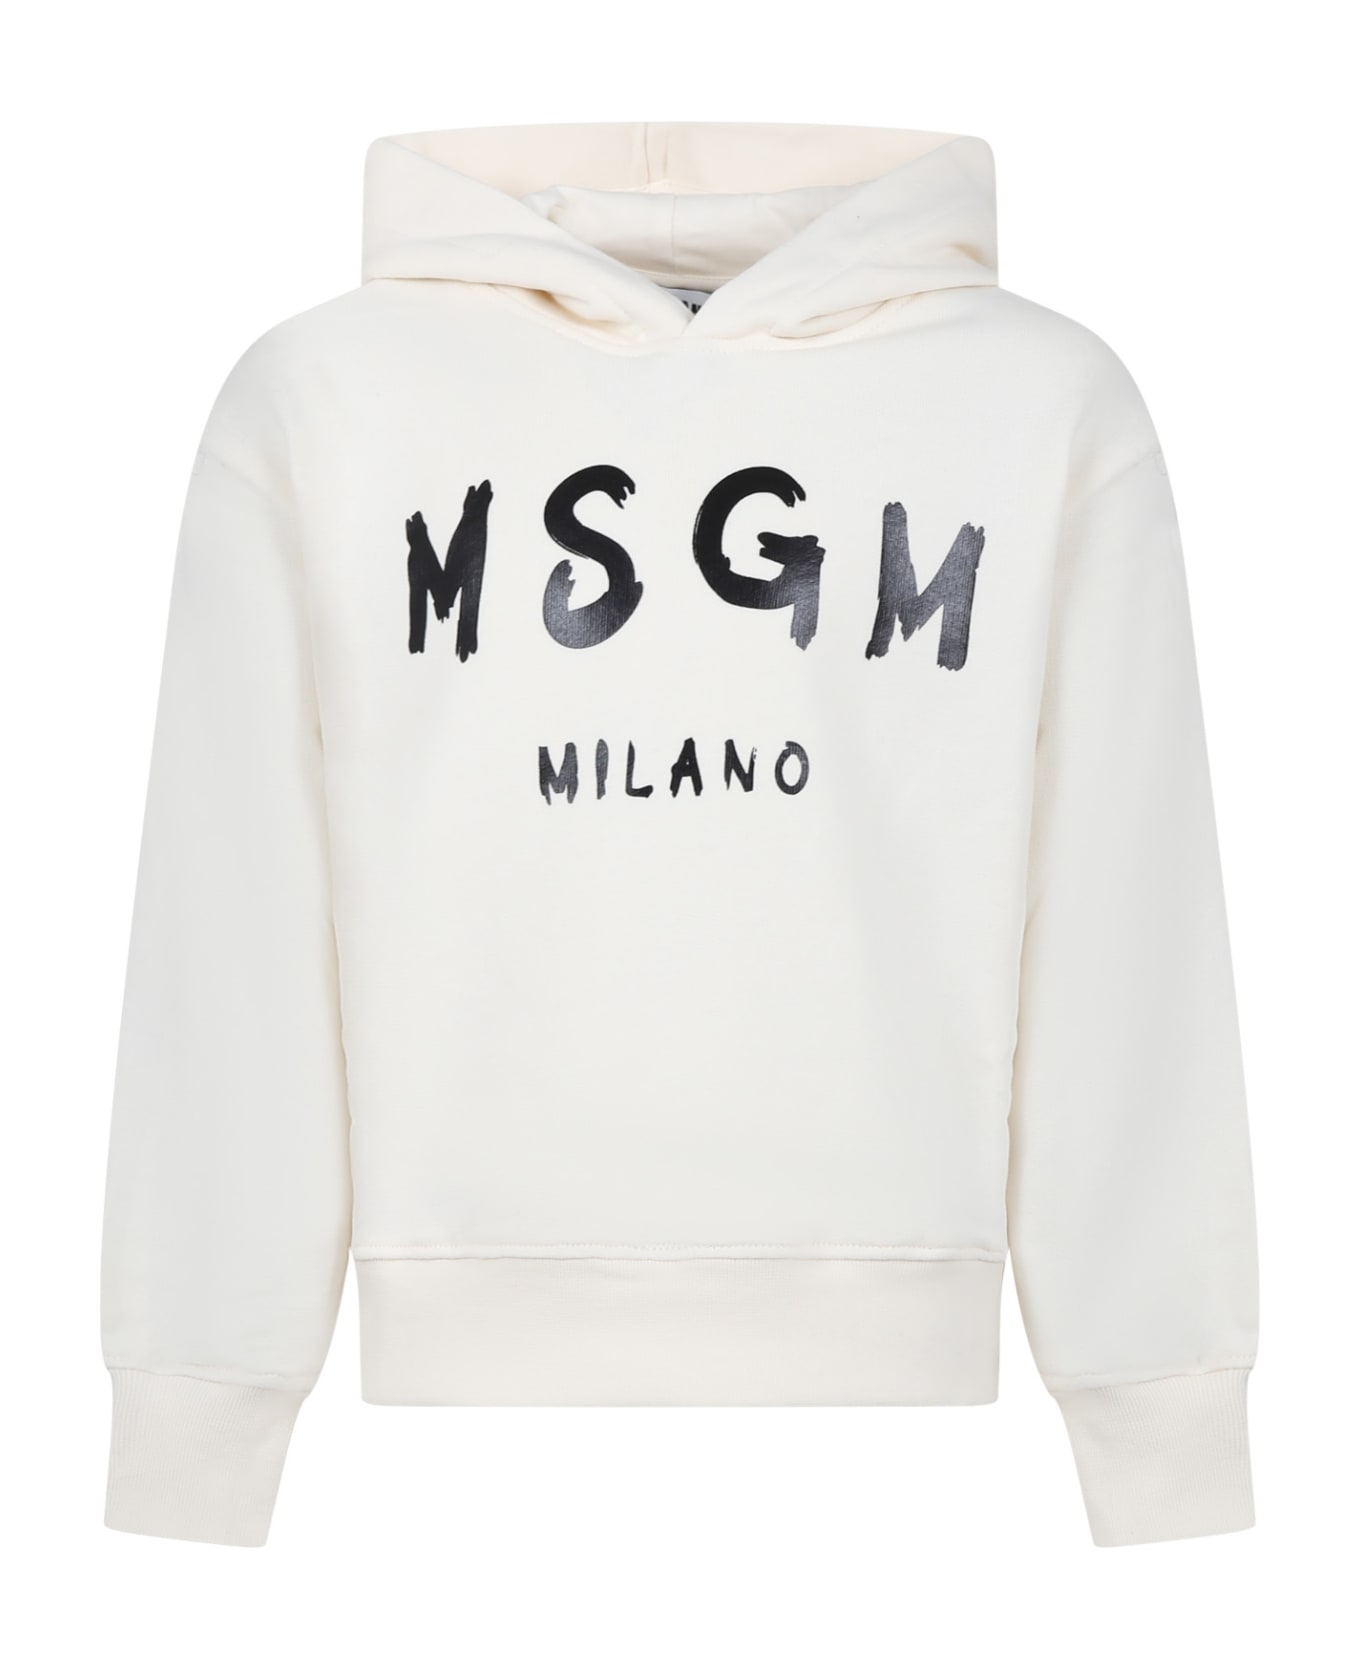 MSGM Ivory Sweatshirt For Kids With Logo - Ivory